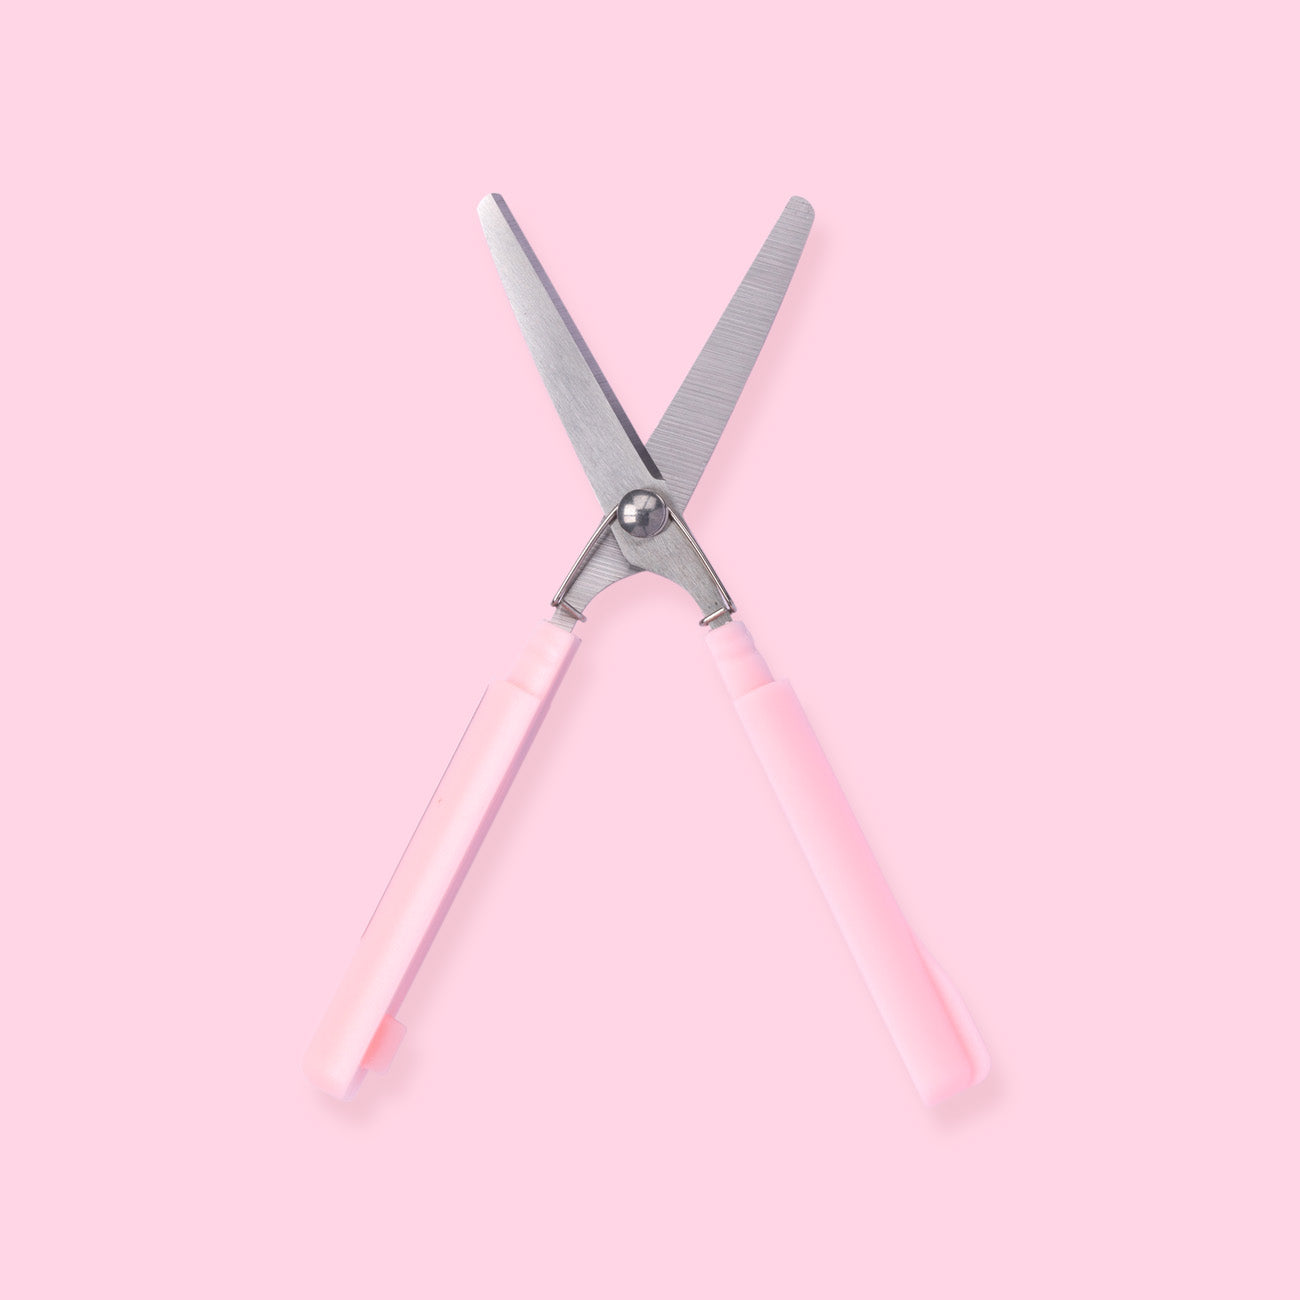 Sun-Star Stickyle Scissors - Compact Type - Pink